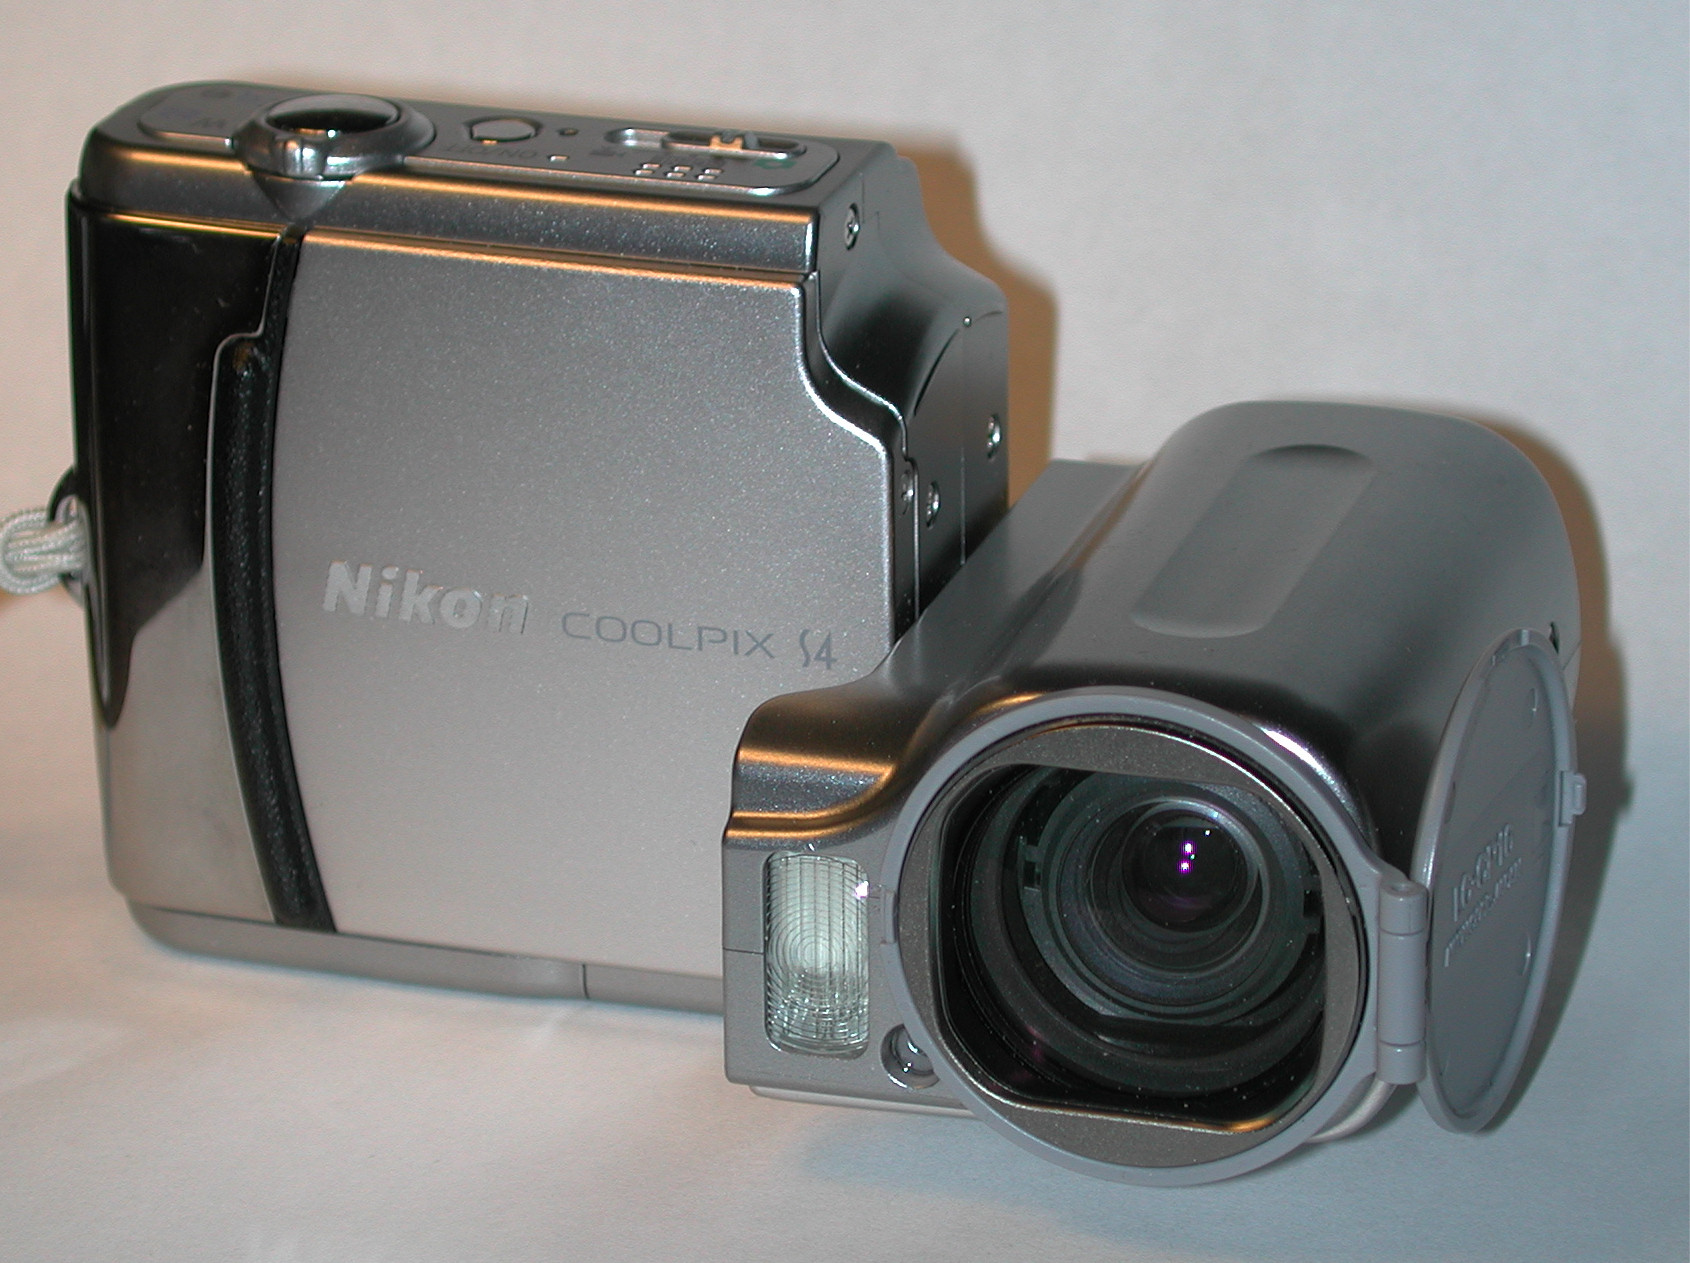 Nikon Coolpix S4 - Wikipedia